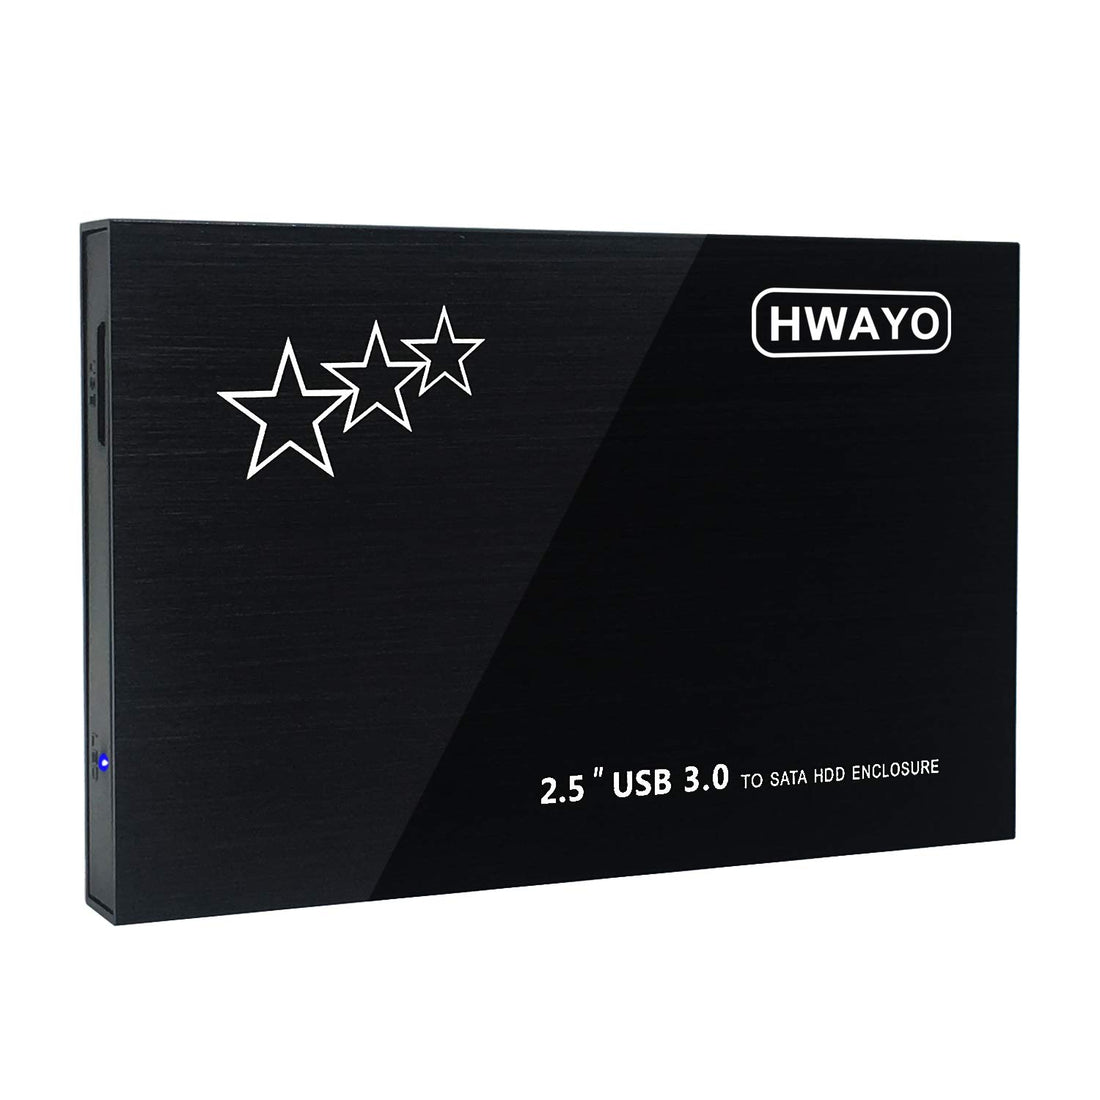 160GB External Hard Drive Portable - HWAYO 2.5'' Ultra Slim HDD Storage USB 3.0 for PC, Laptop, Mac, Chromebook (Black)